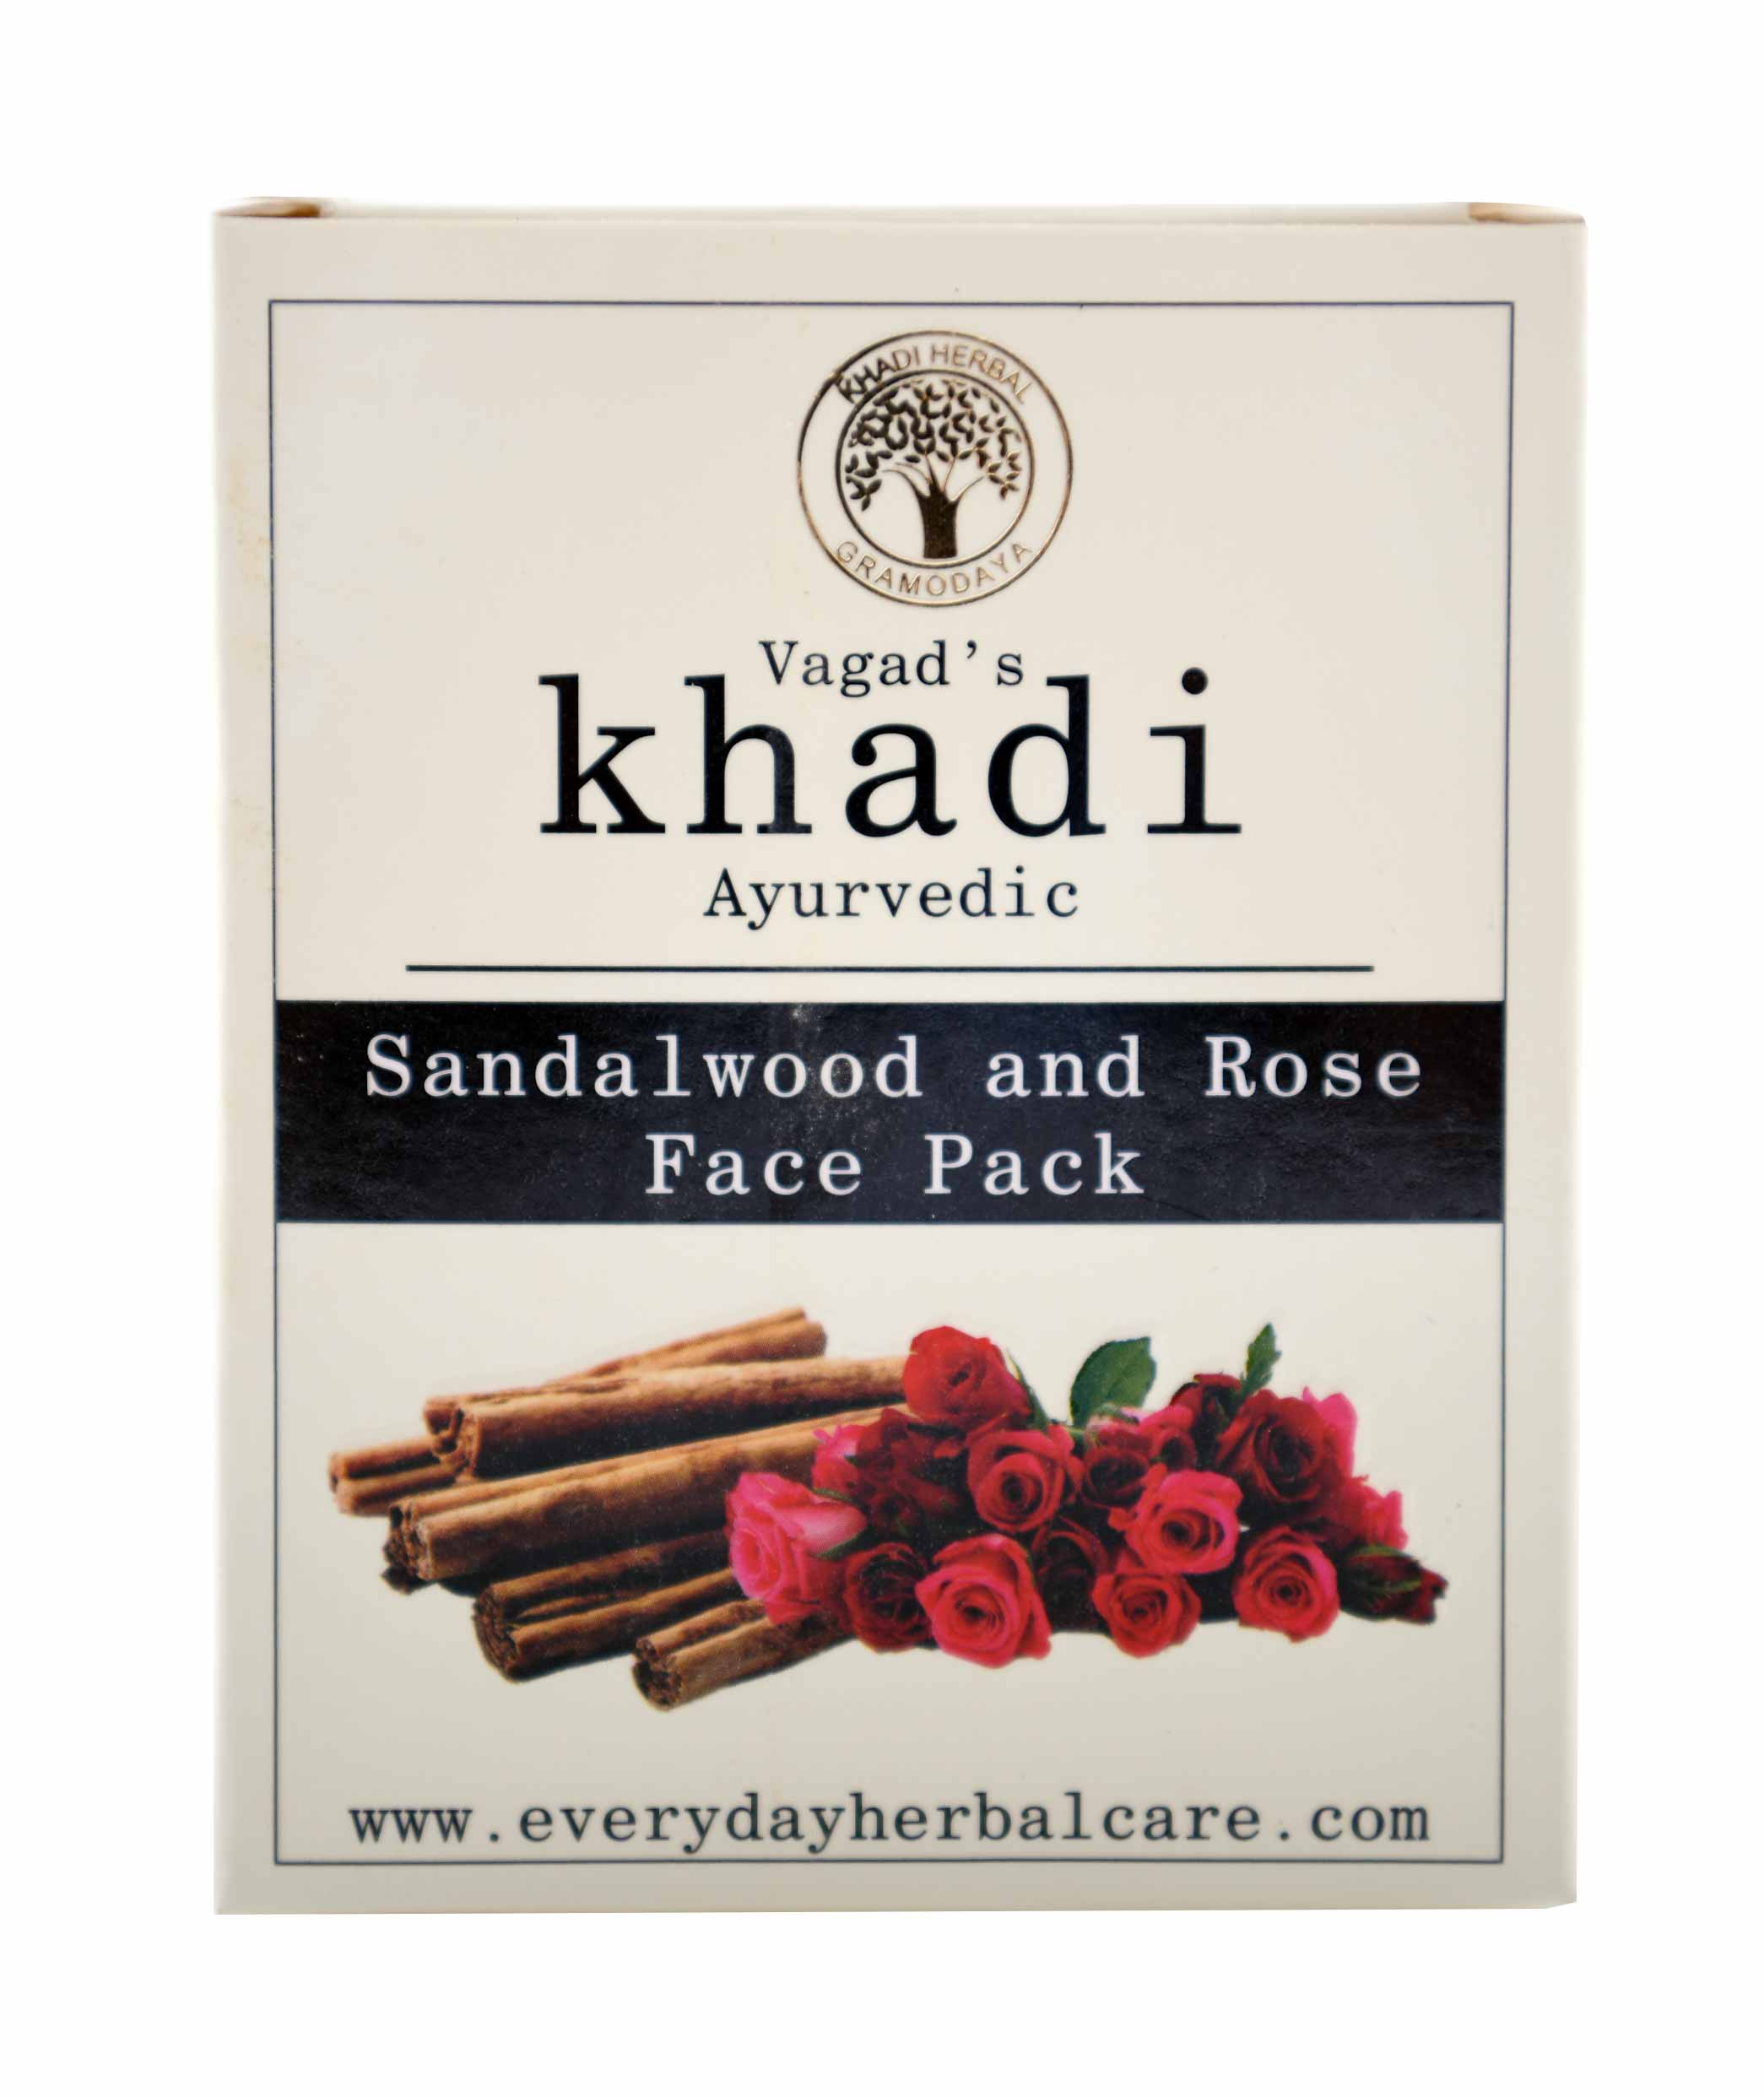 Buy Vagad's Khadi Sandal And Rose Face Pack Powder at Best Price Online